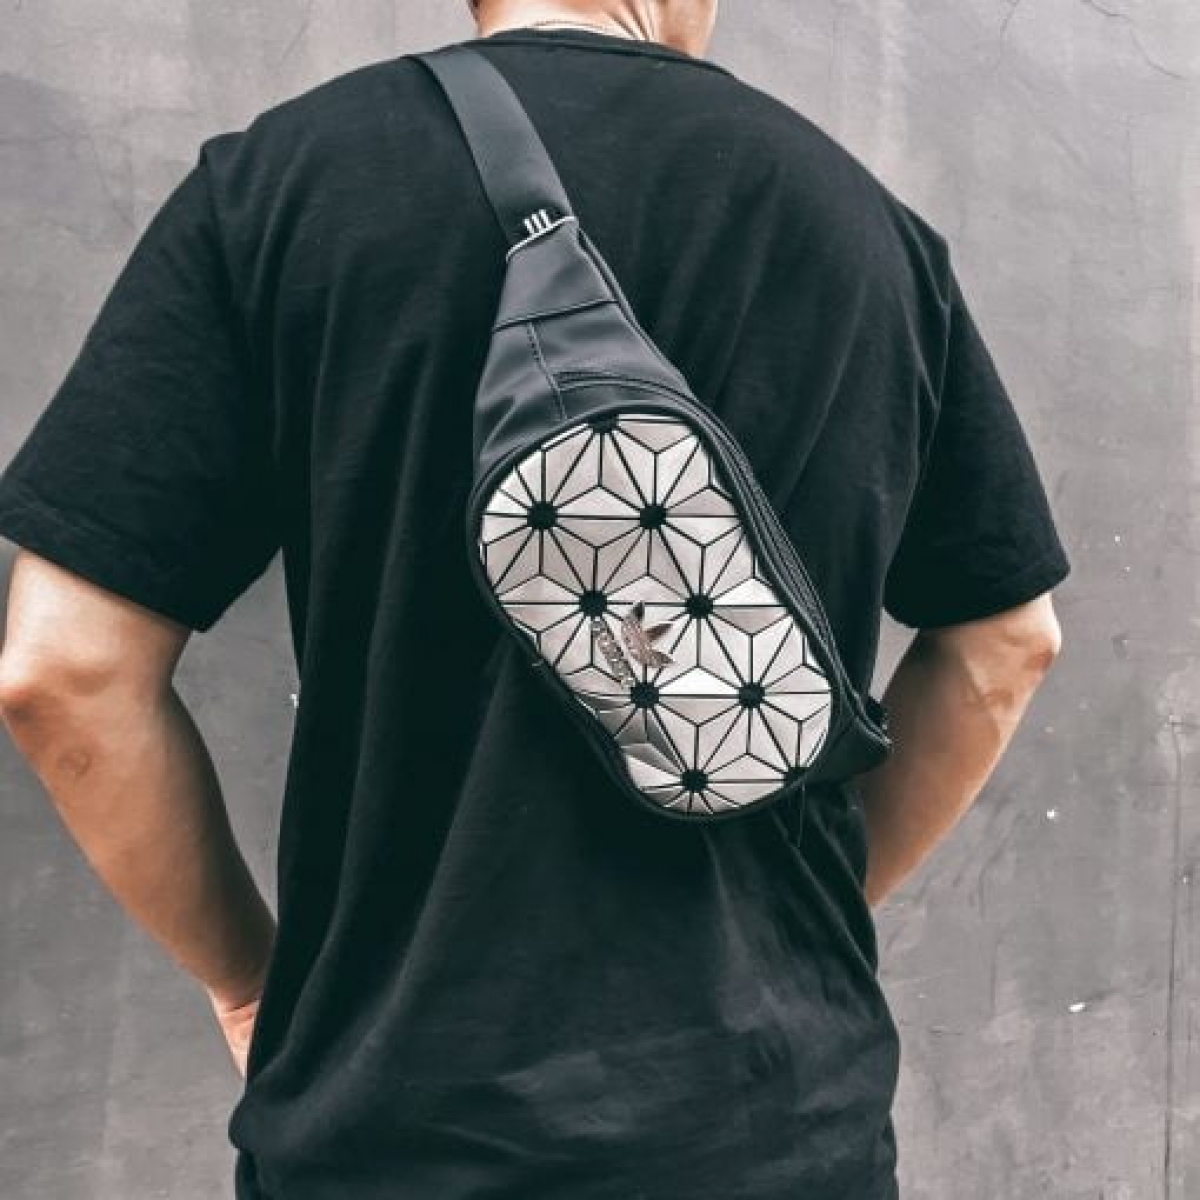 Túi bao tử Adidas họa tiết 3D